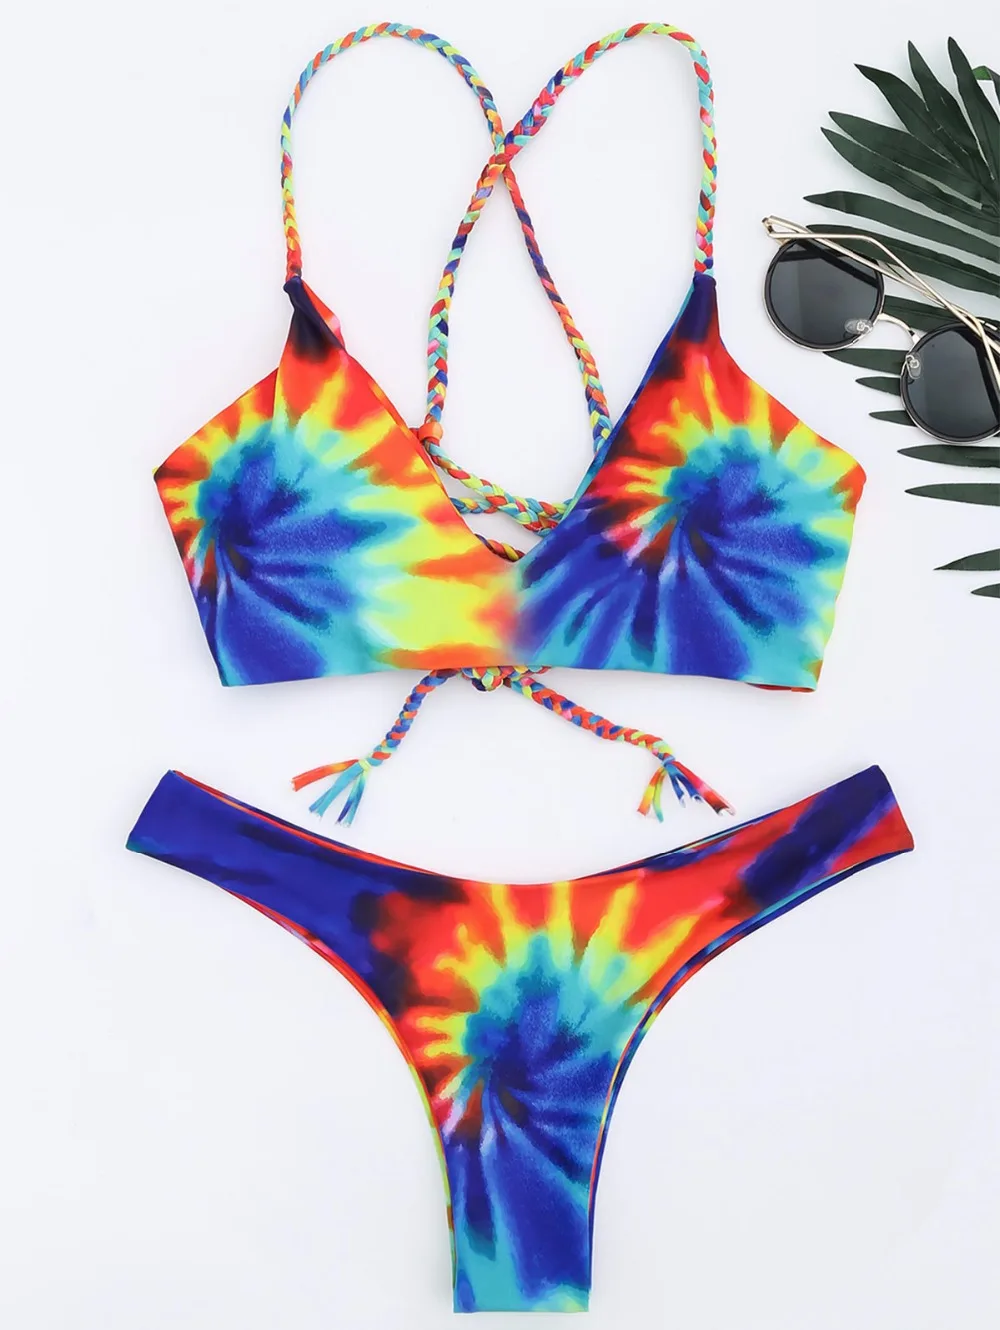 

ZAFUL New Design Women Sexy Bikini Set Tie Dye Braided Criss Cross Swimsuit Spaghetti Straps Bathing Suit Swim Wear Hot Selling